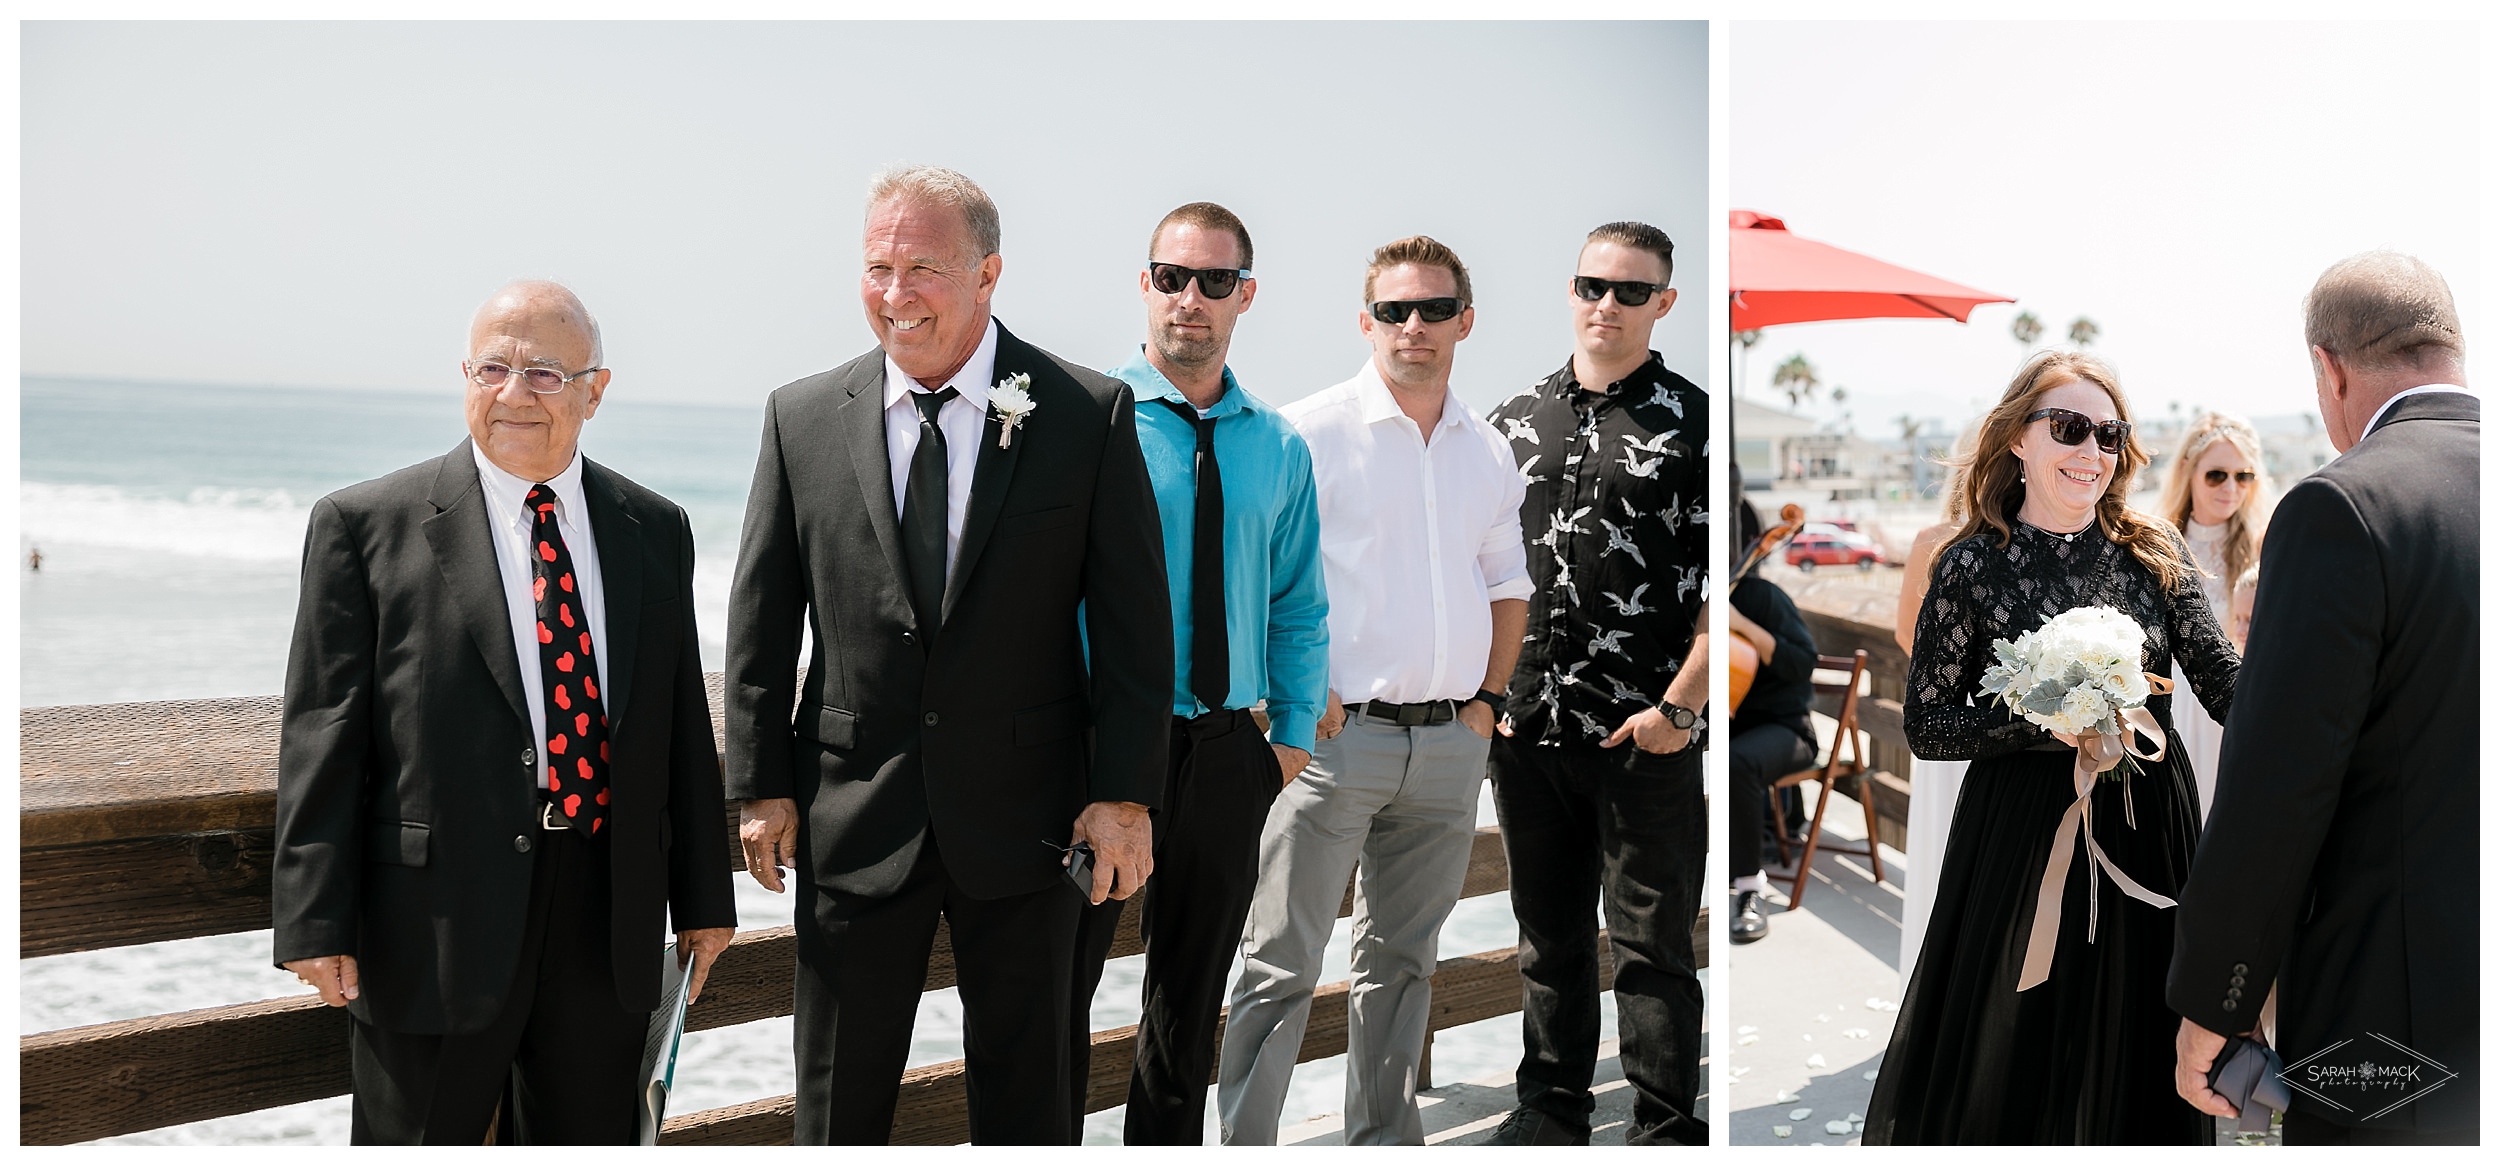 LM-Newport-Beach-Pier-Intimate-Wedding-Photography 67.jpg